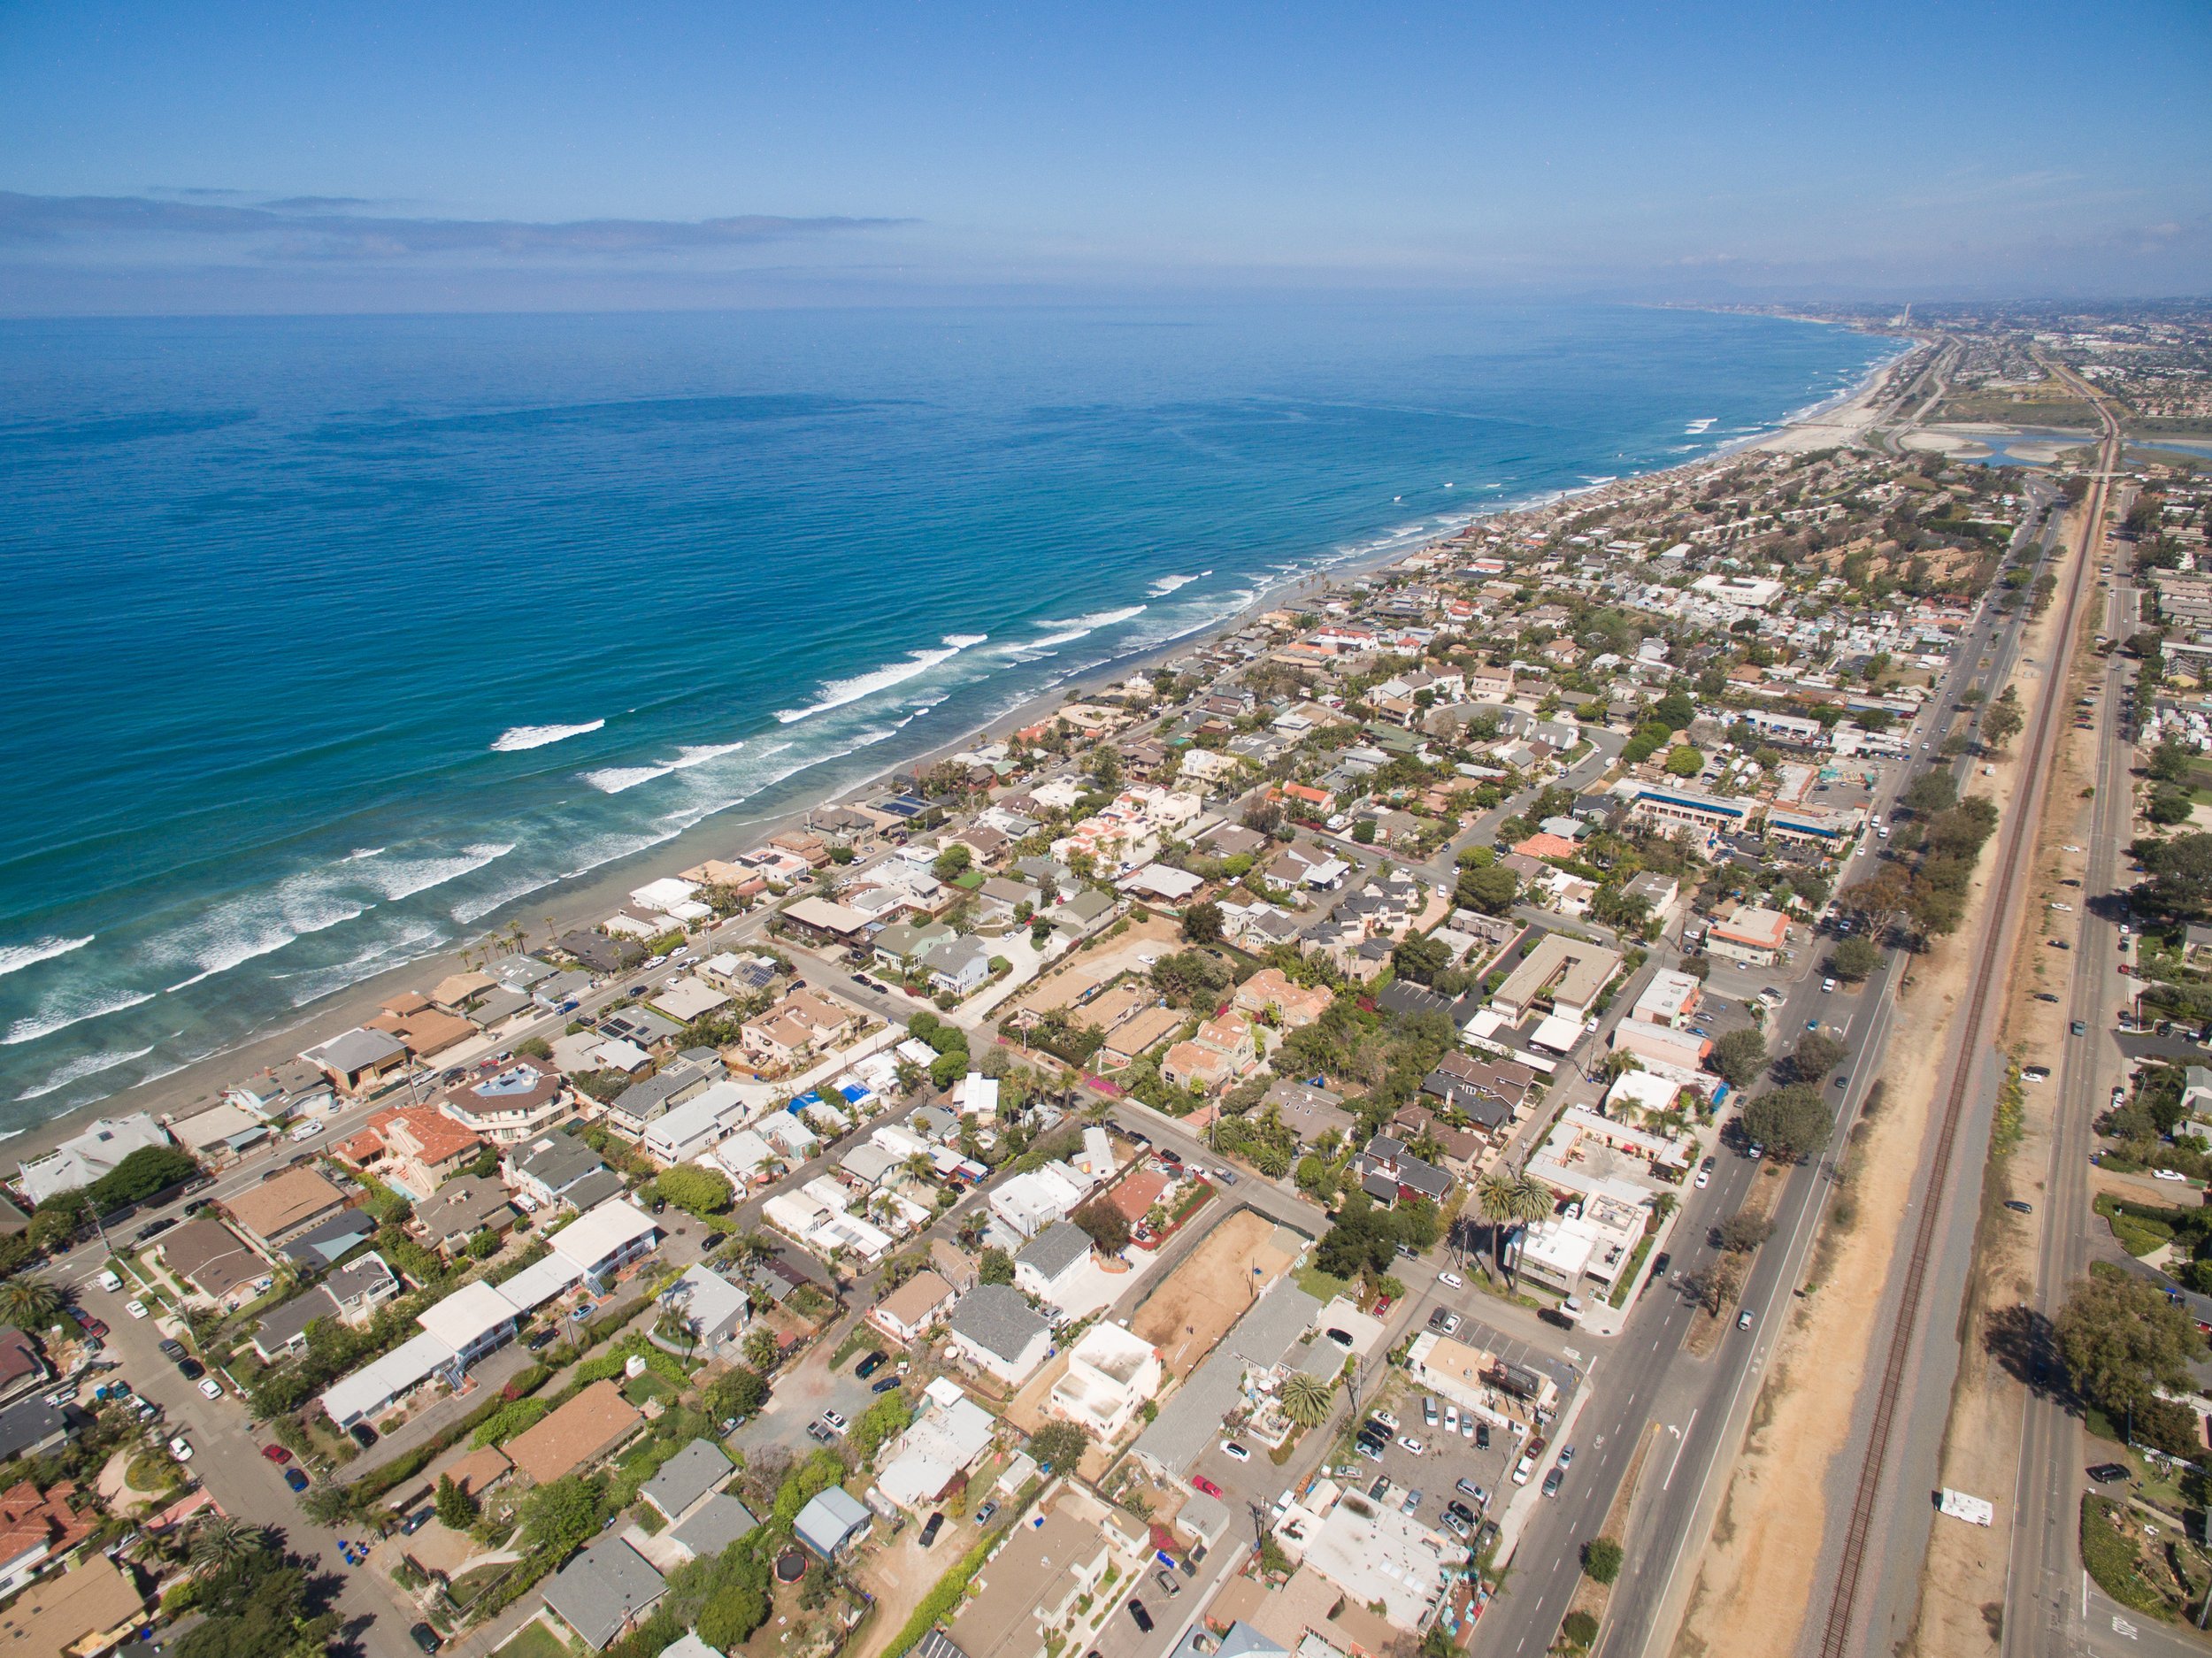 Aerial view of the San Diego Coastline in Encinitas Californa